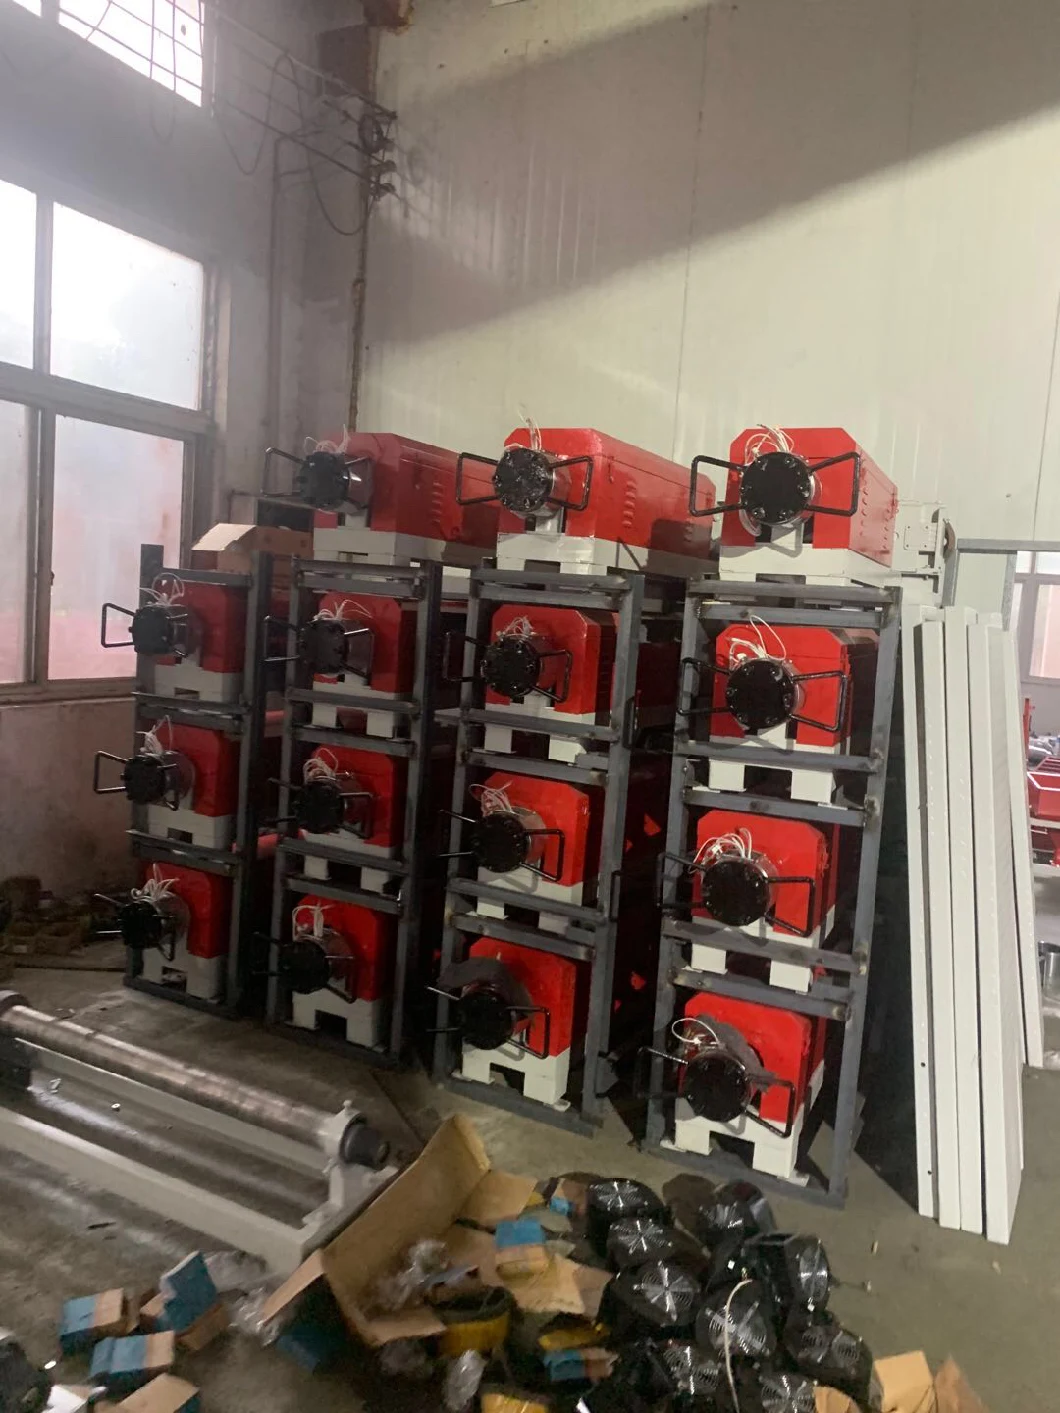 Mingfeng Single Screw Extruder Machine for Plastic Recycling Pelletizing Machine